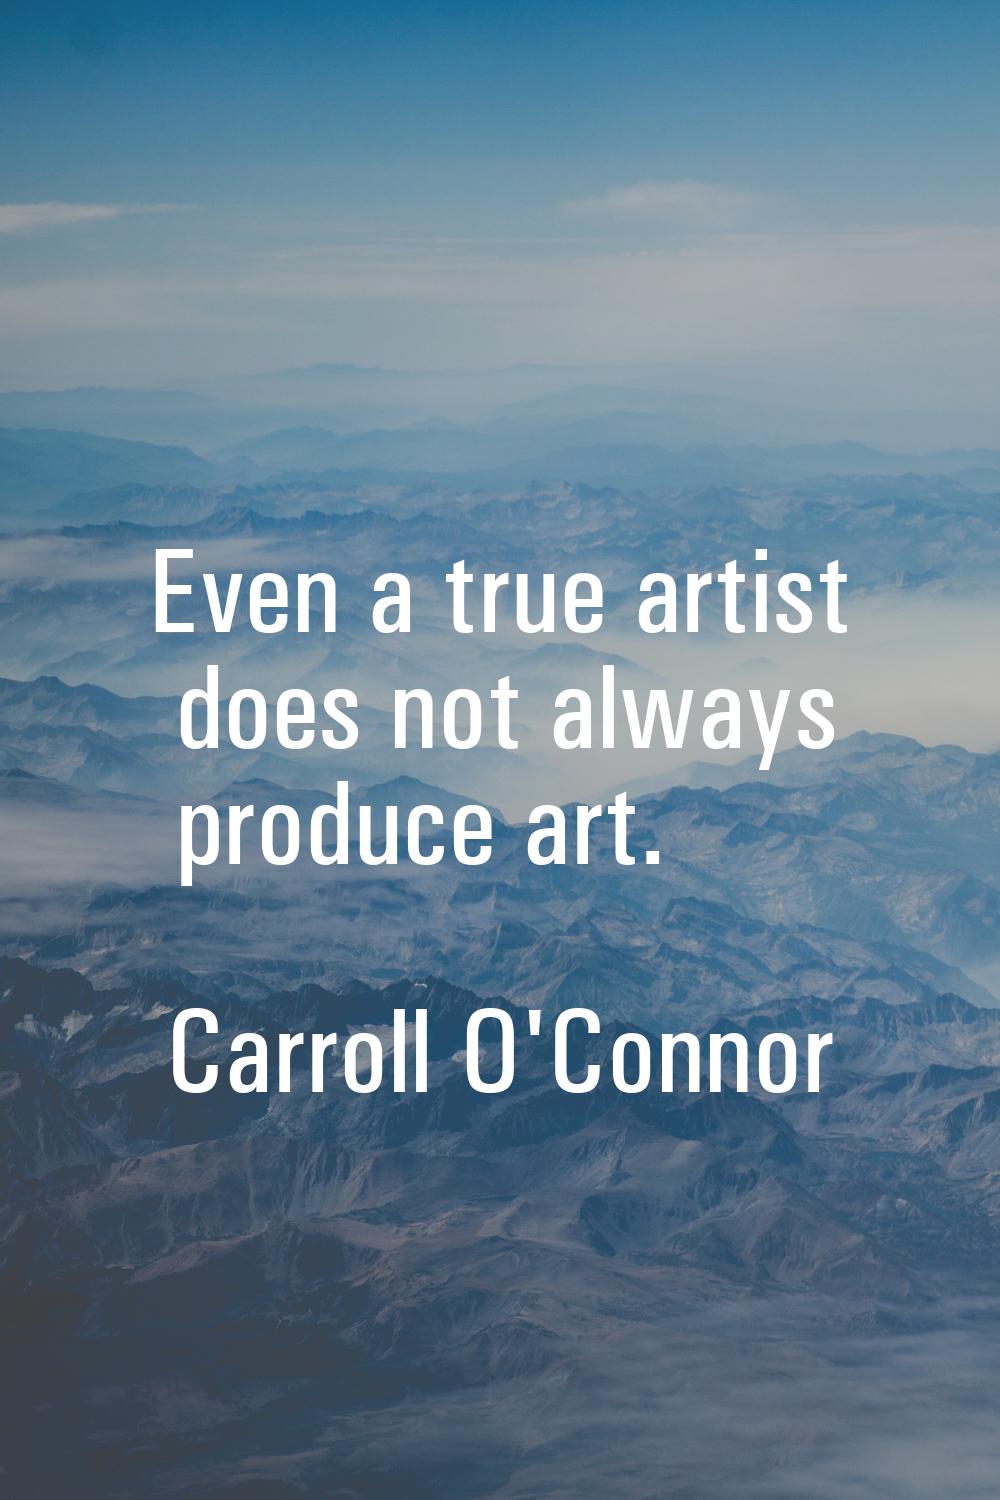 Even a true artist does not always produce art.